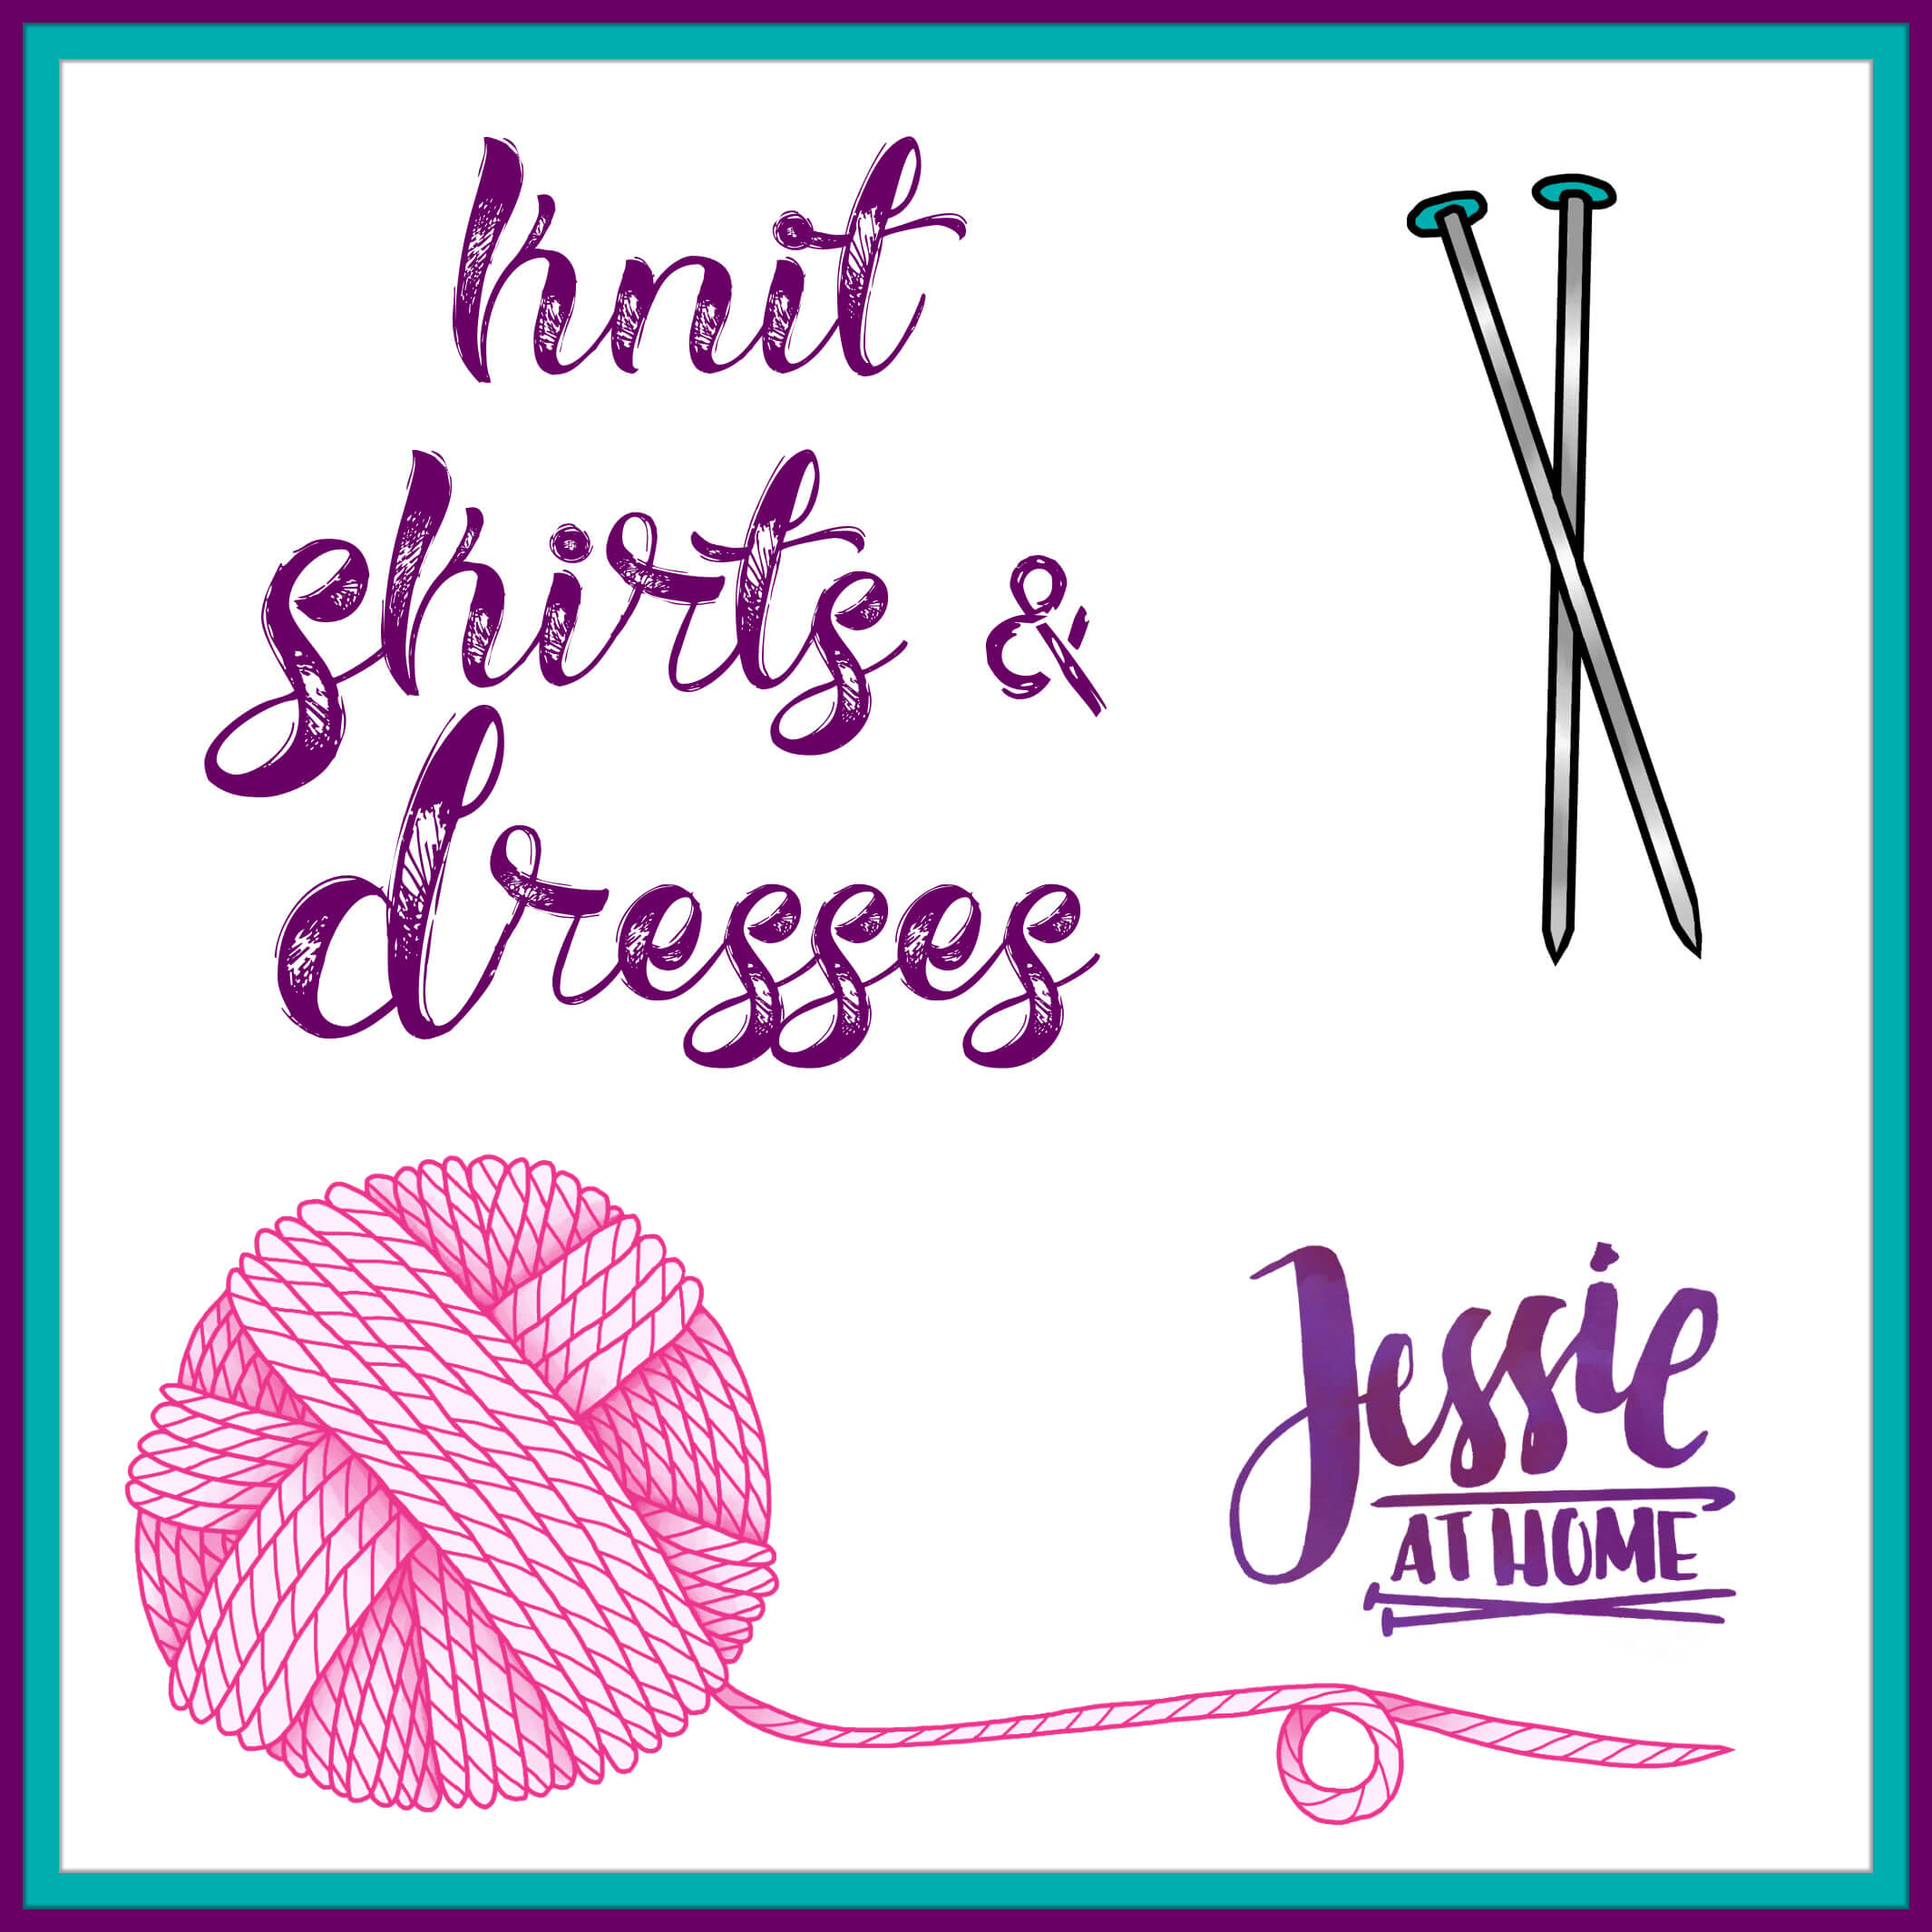 Knit Skirts & Dresses Menu on Jessie At Home